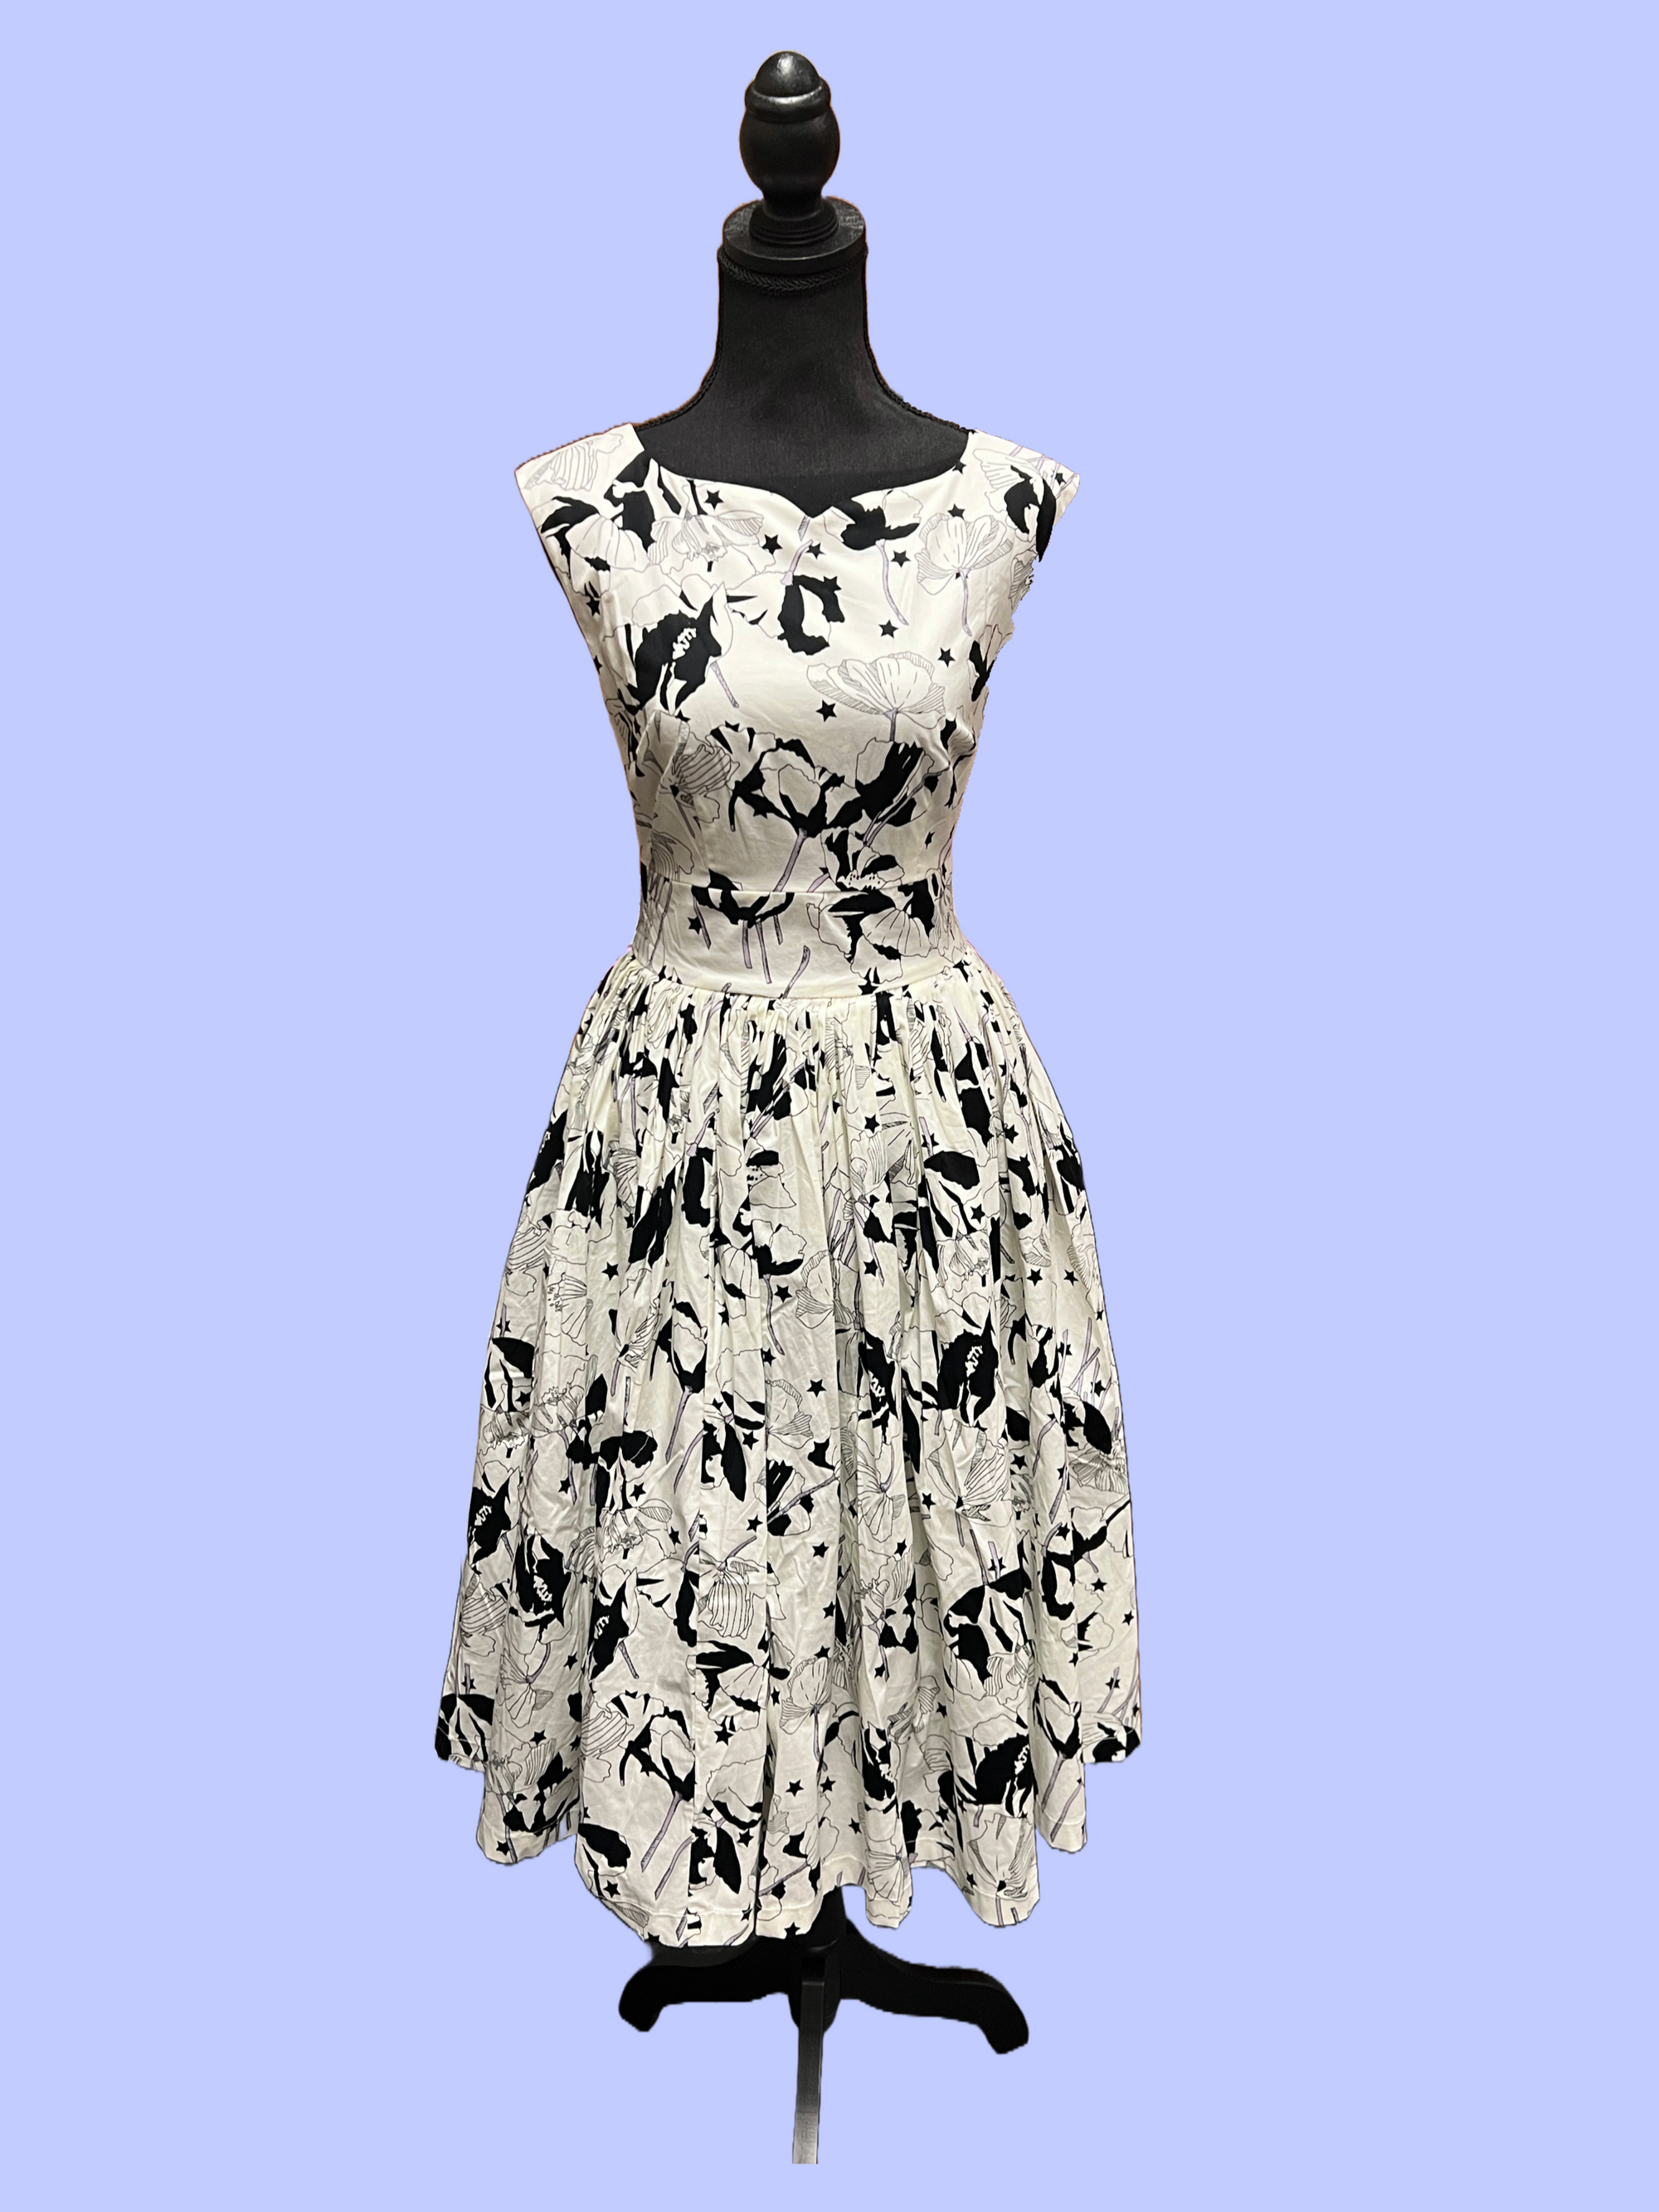 Sleeveless Dress in Black and White Print